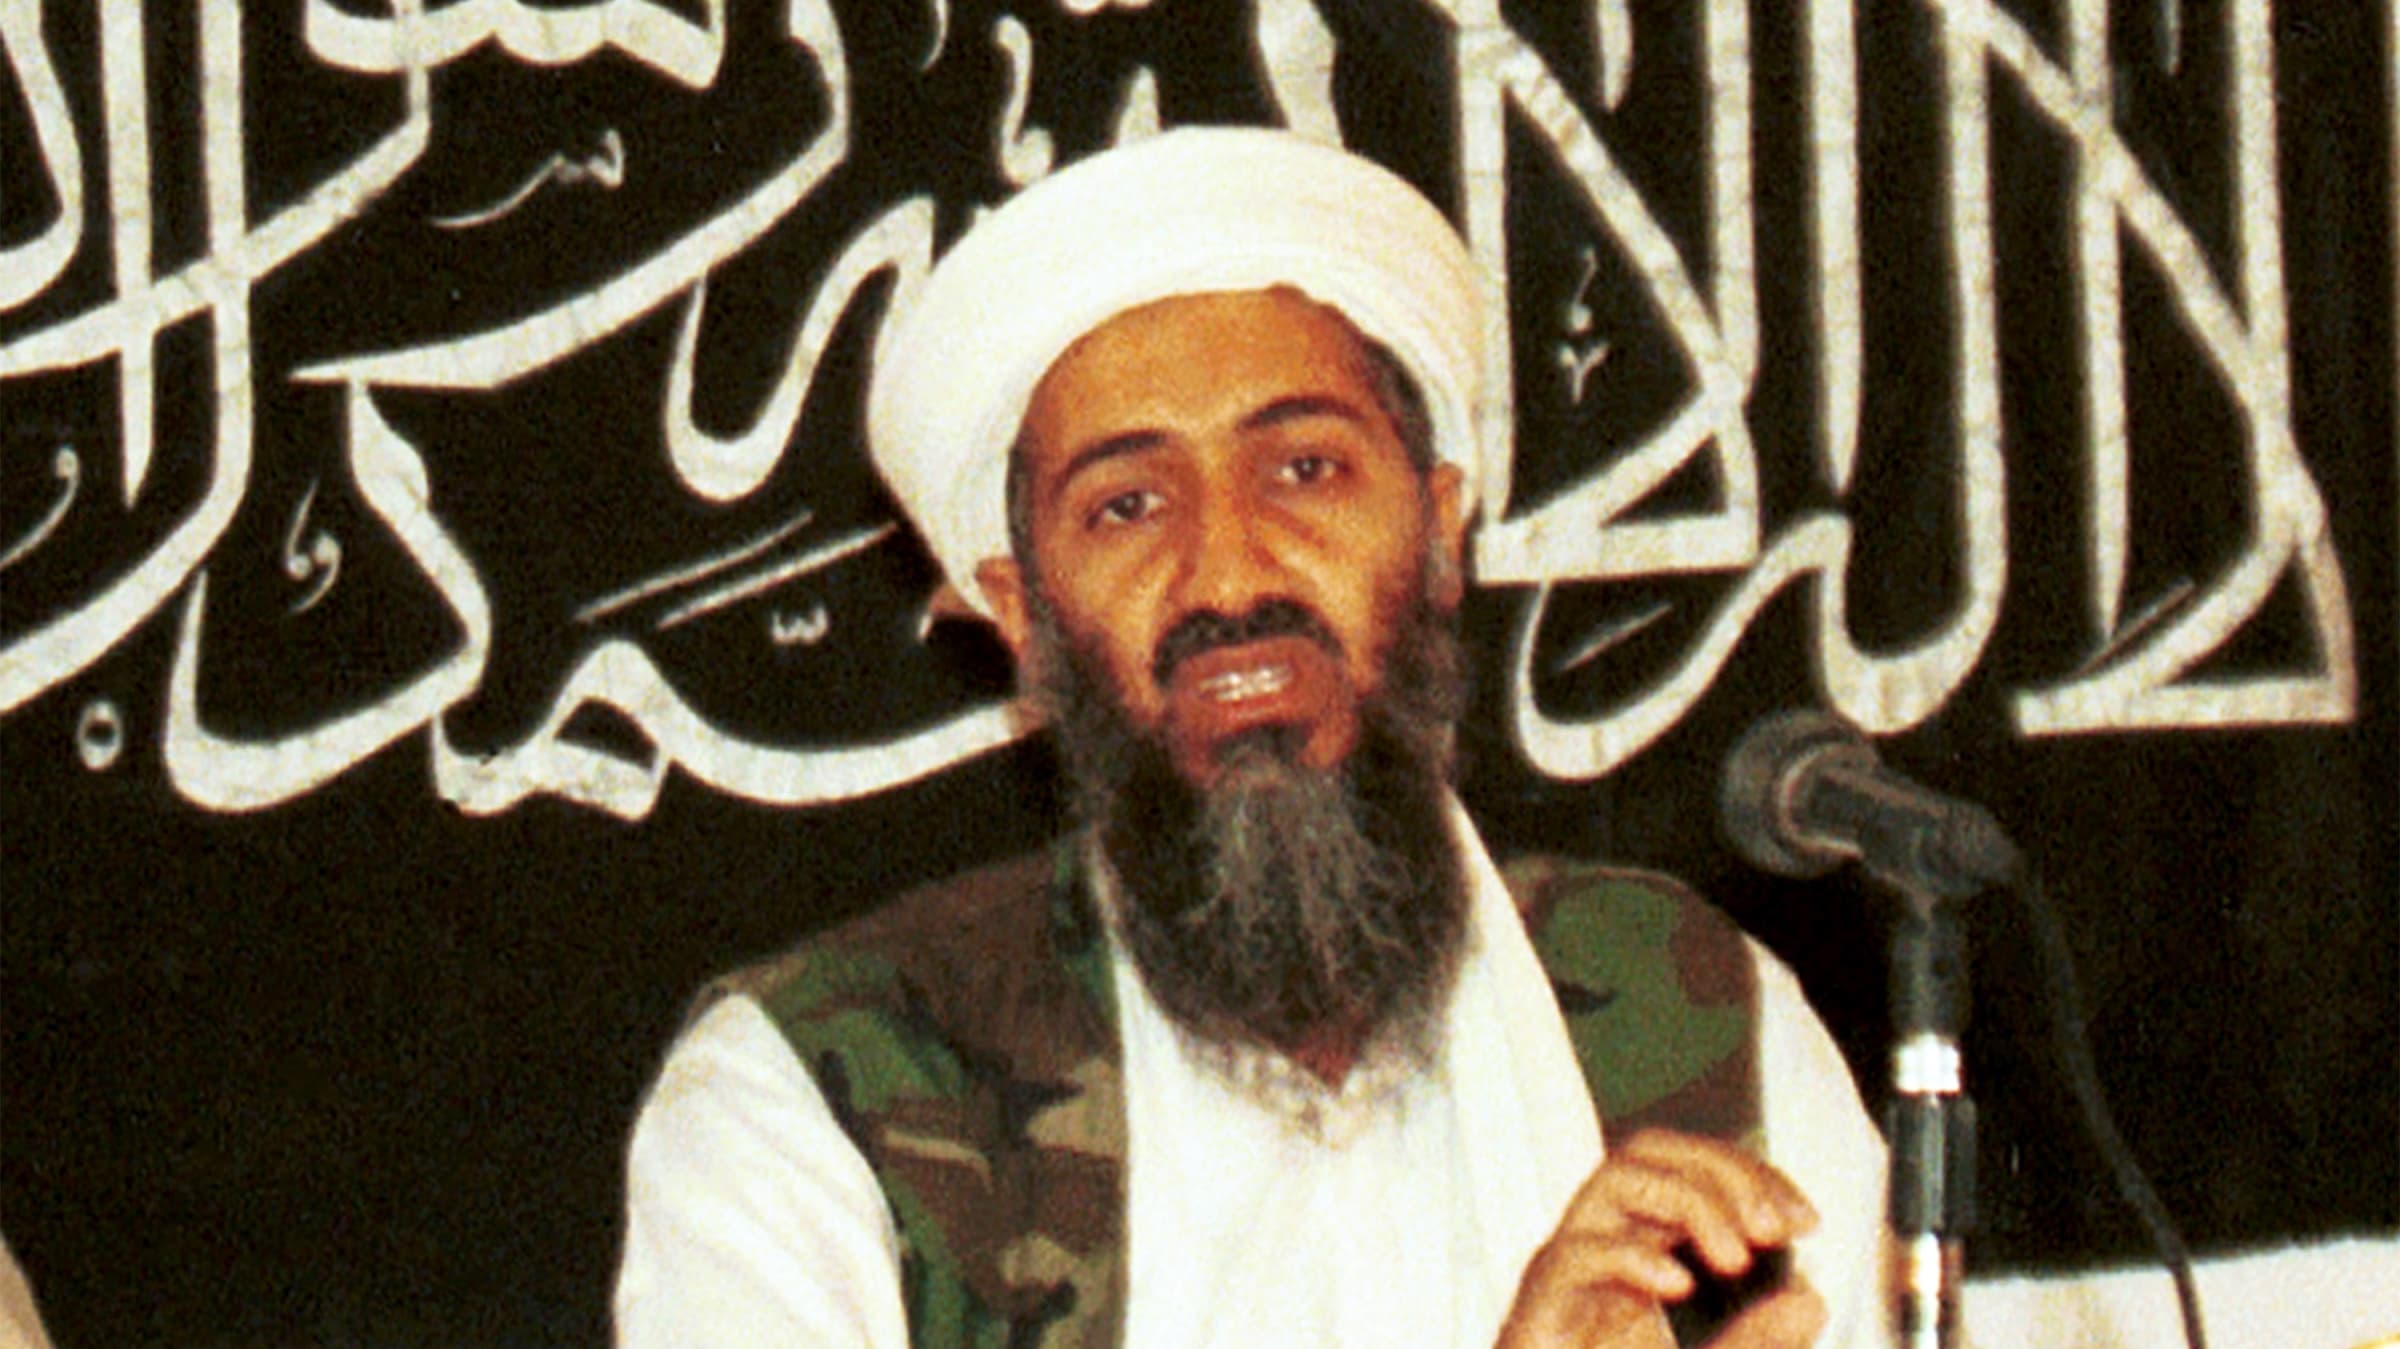 X Video Ladan - Was Osama bin Laden Sending Coded Messages in Porn?